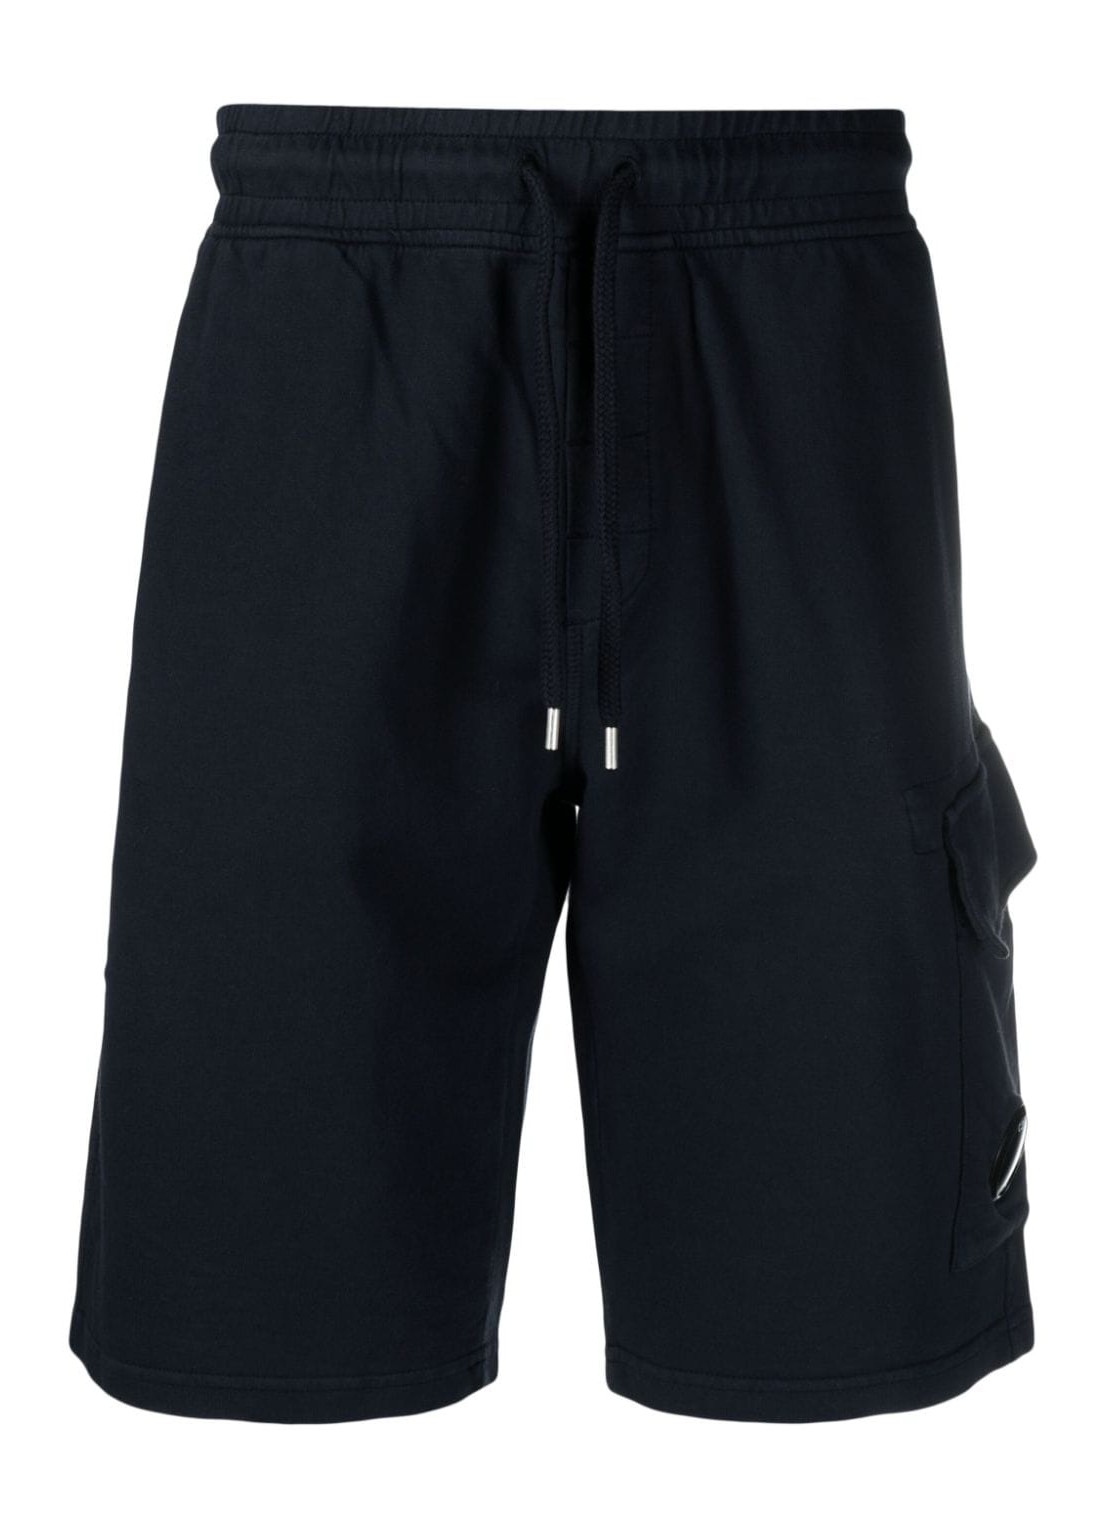 Pantalon corto c.p.company short pant man light fleece utility shorts 16cmsb021a002246g 888 talla M
